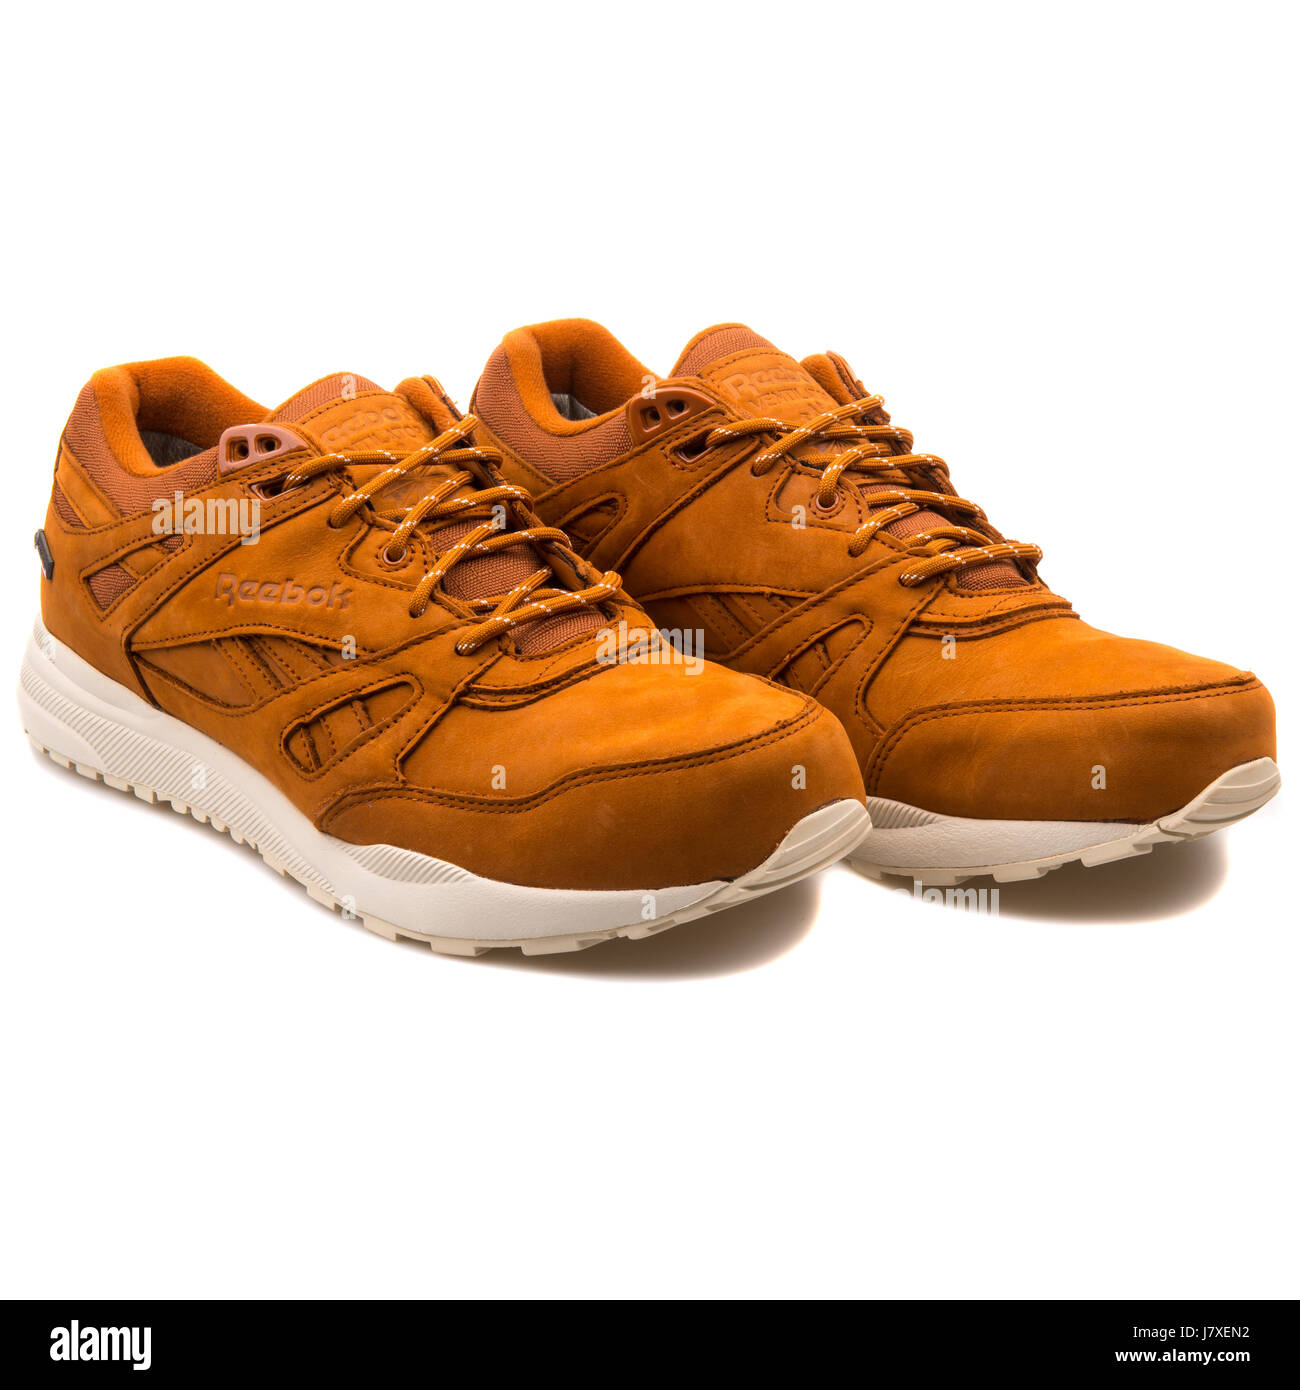 Reebok Ventilator Goretex Men's Brown Paperwhite Rosette Sneakers - V66309  Stock Photo - Alamy